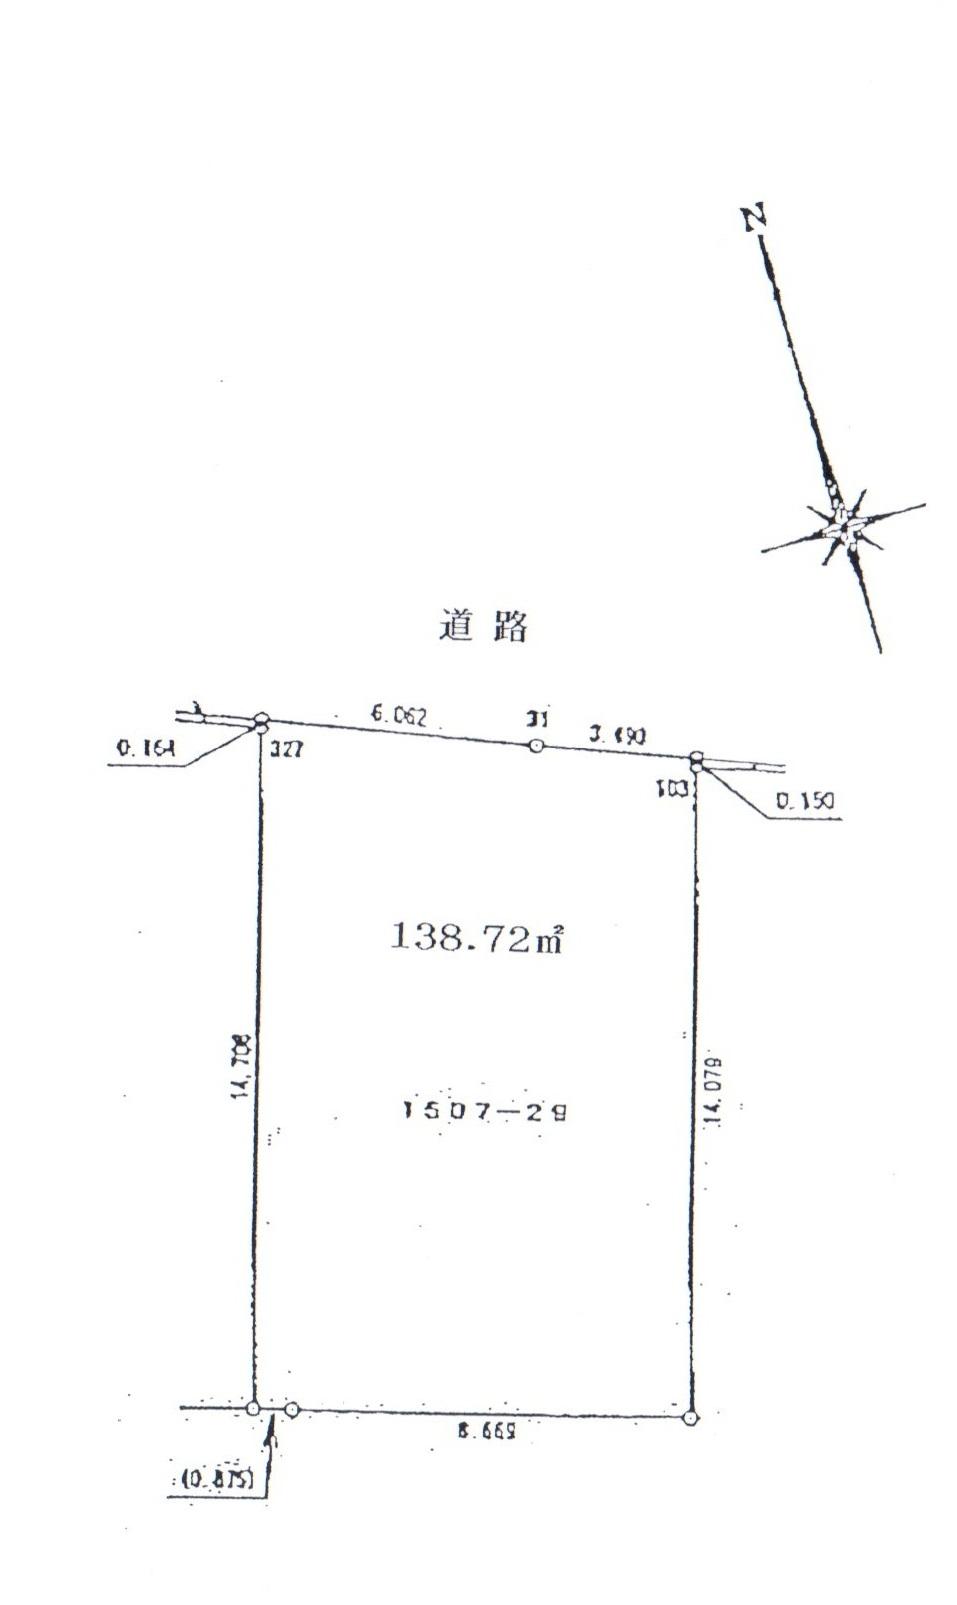 Compartment figure. Land price 5.5 million yen, Land area 138.72 sq m